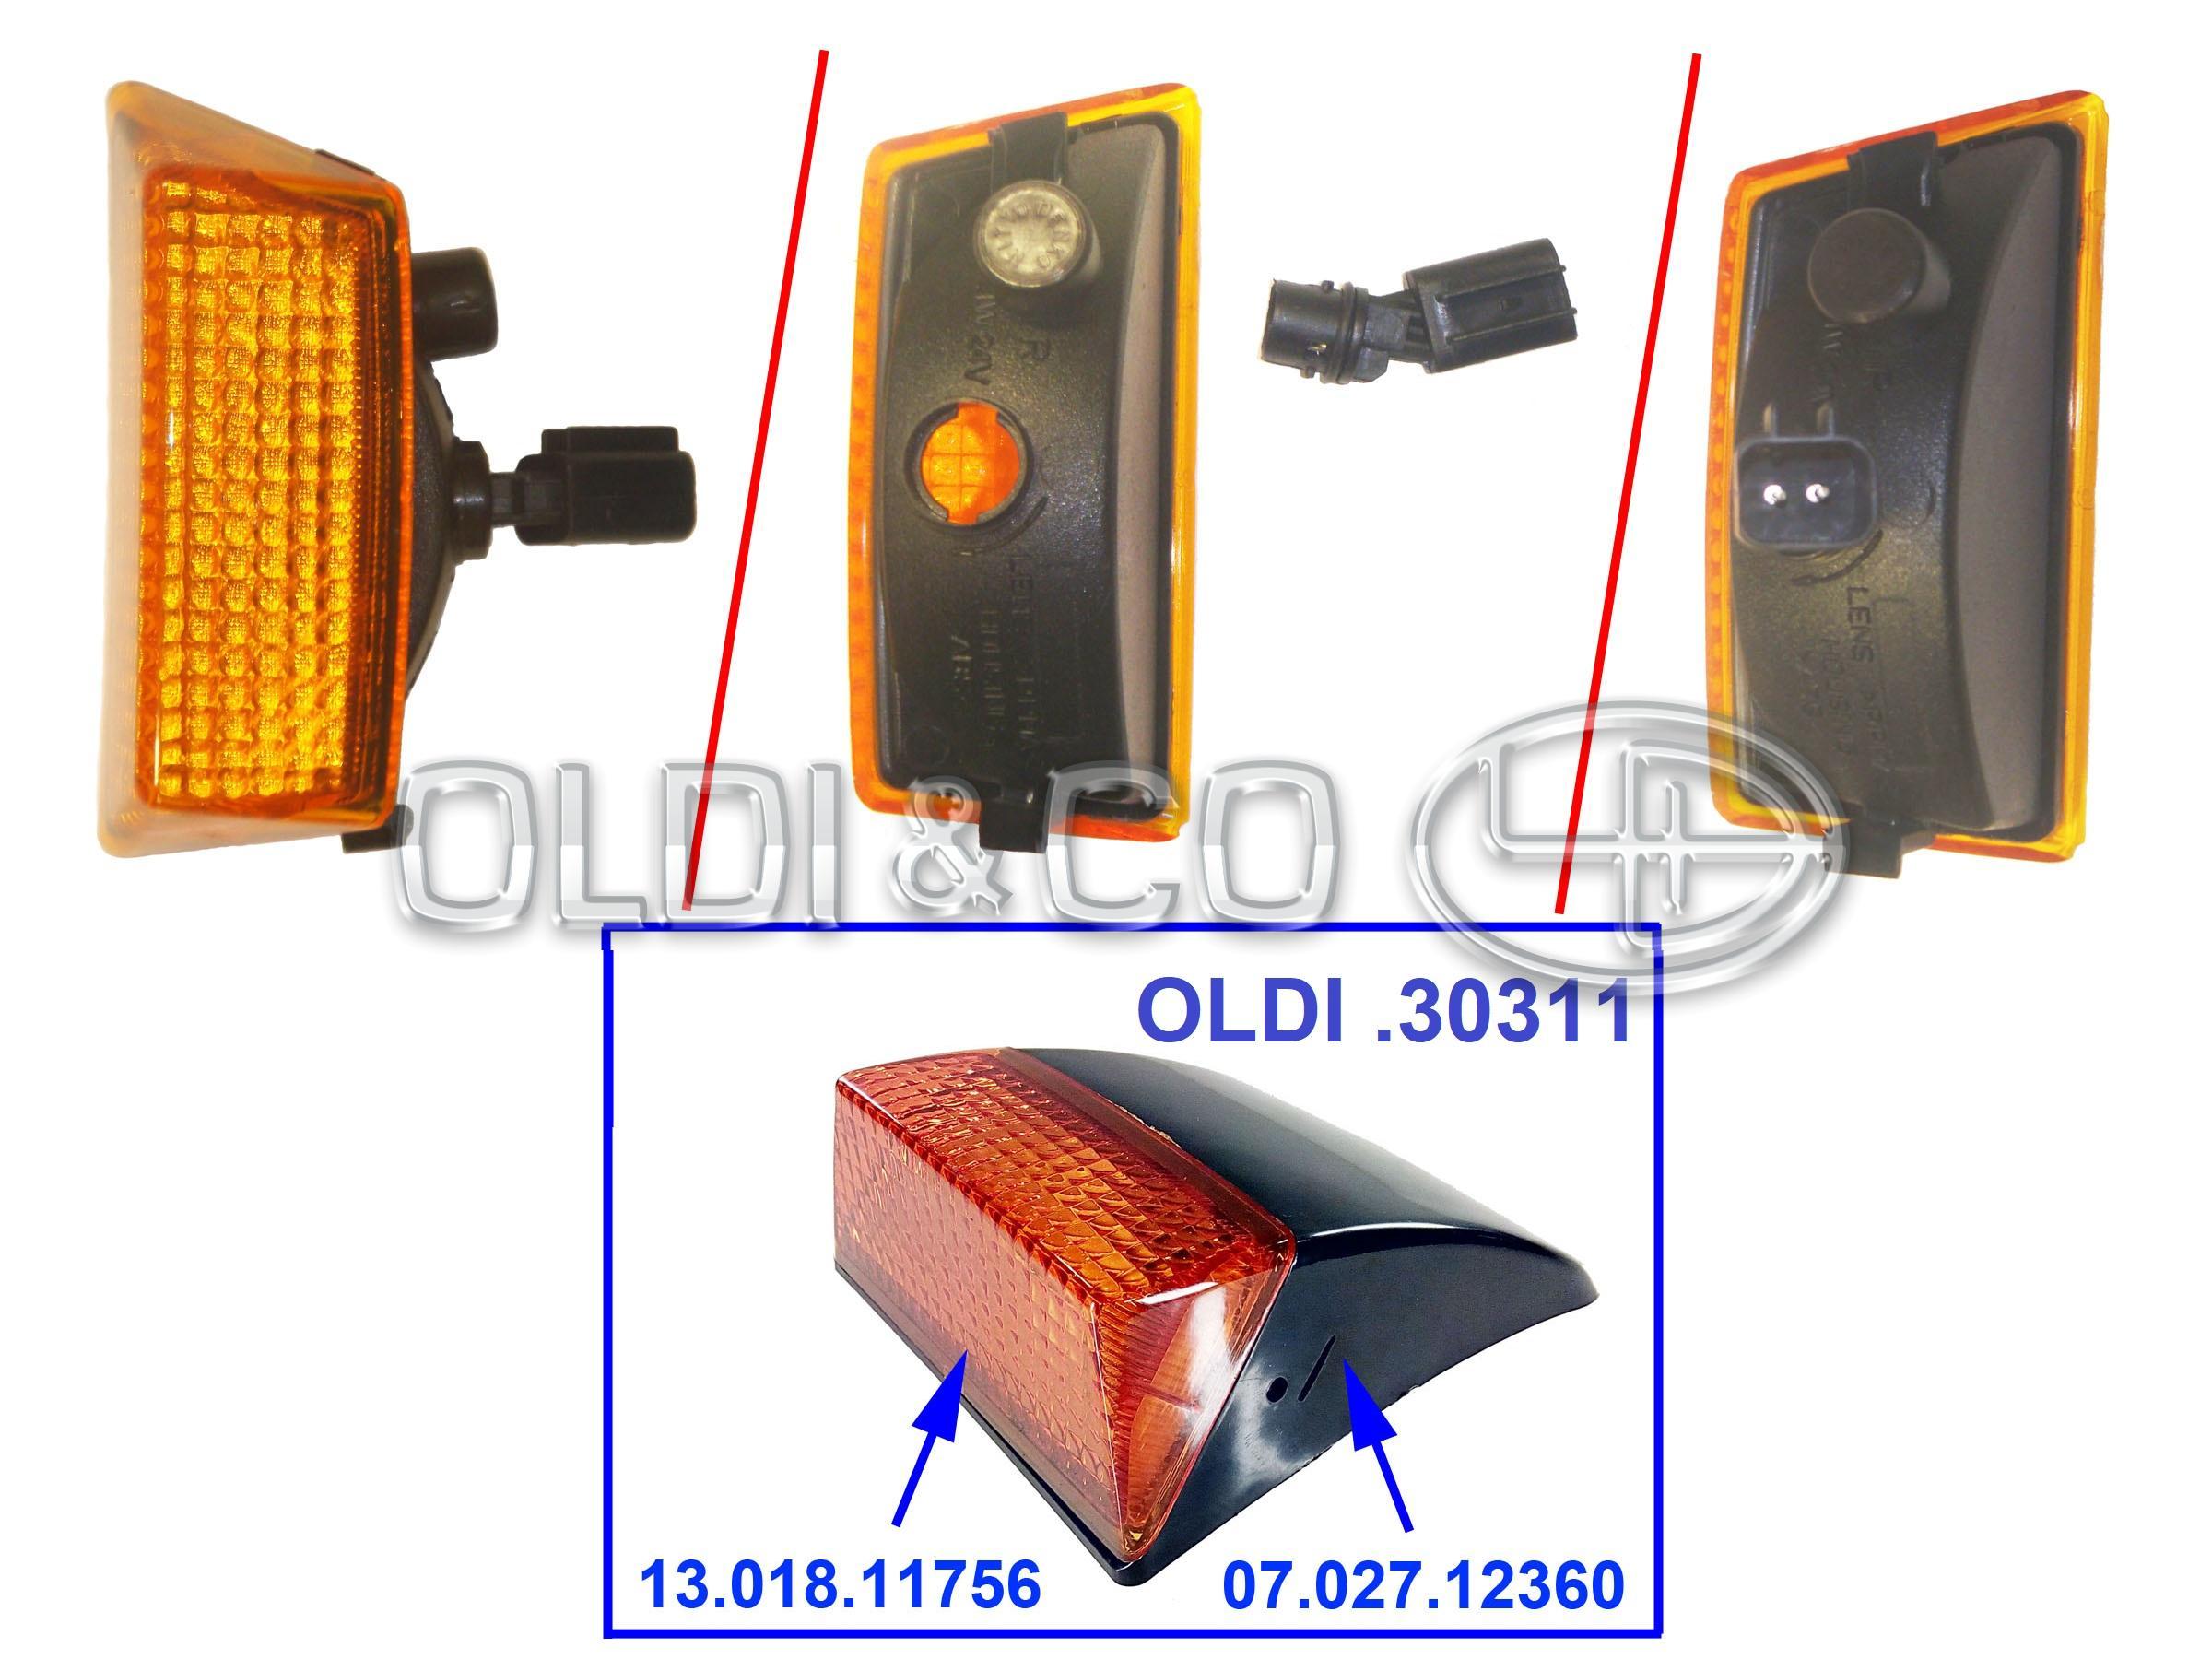 13.018.11756 Optics (not certified) → Turn signal lamp